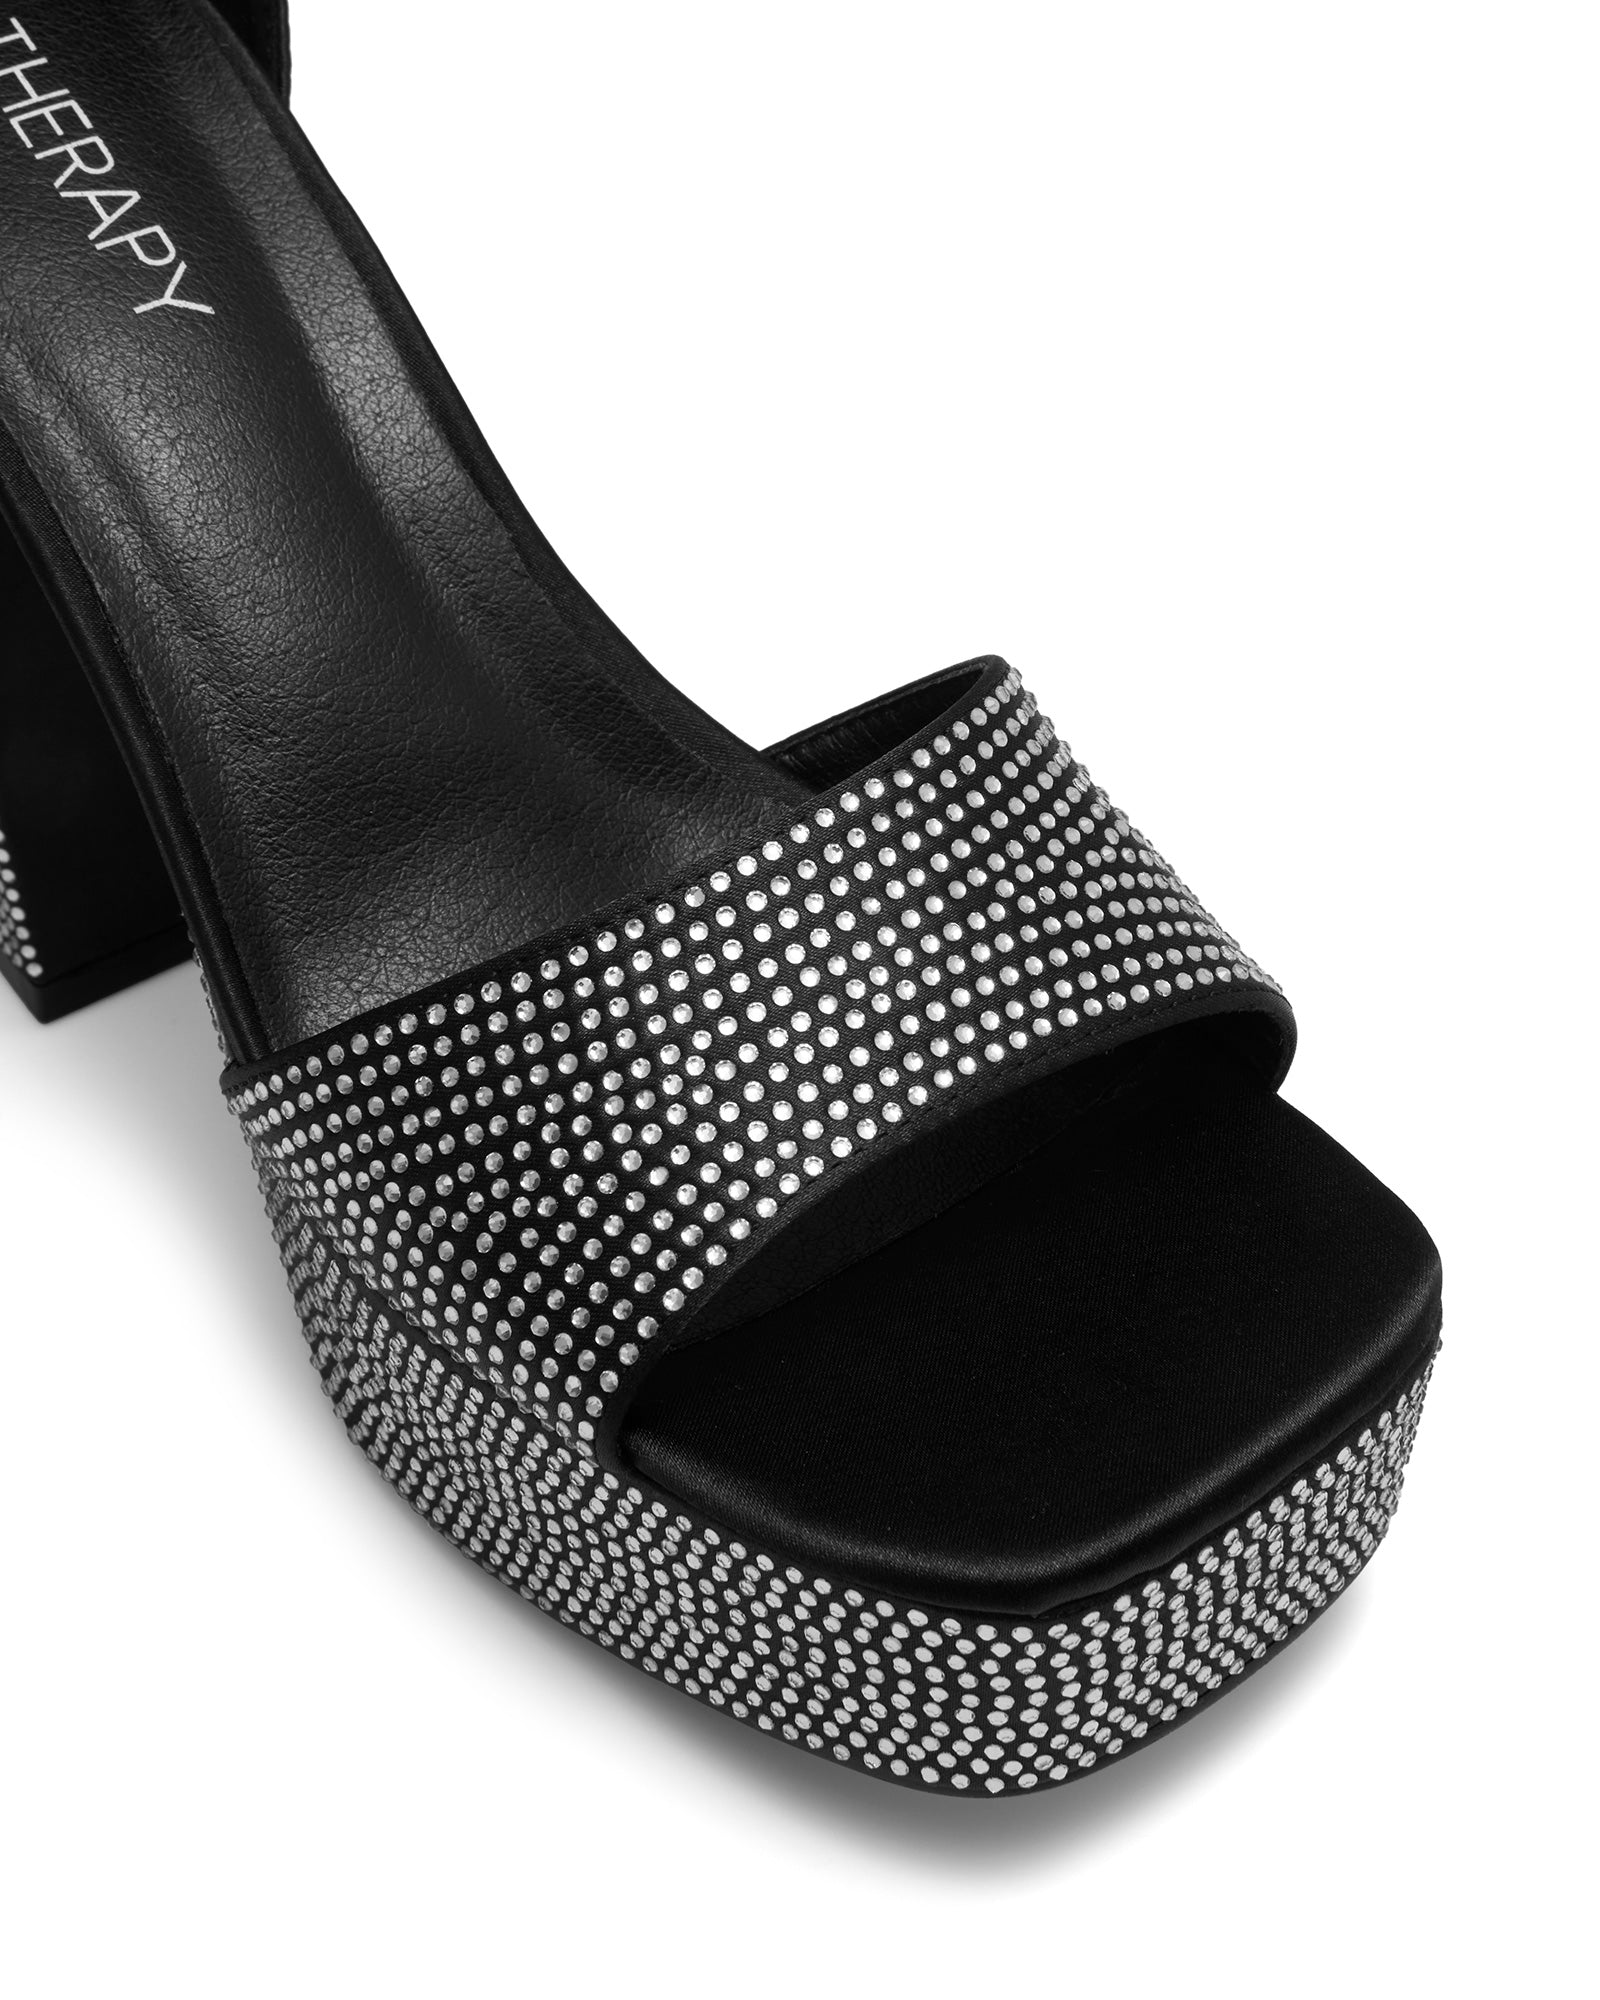 Therapy Shoes Moda Black Satin | Women's Heels | Sandals | Platform | Rhinestone